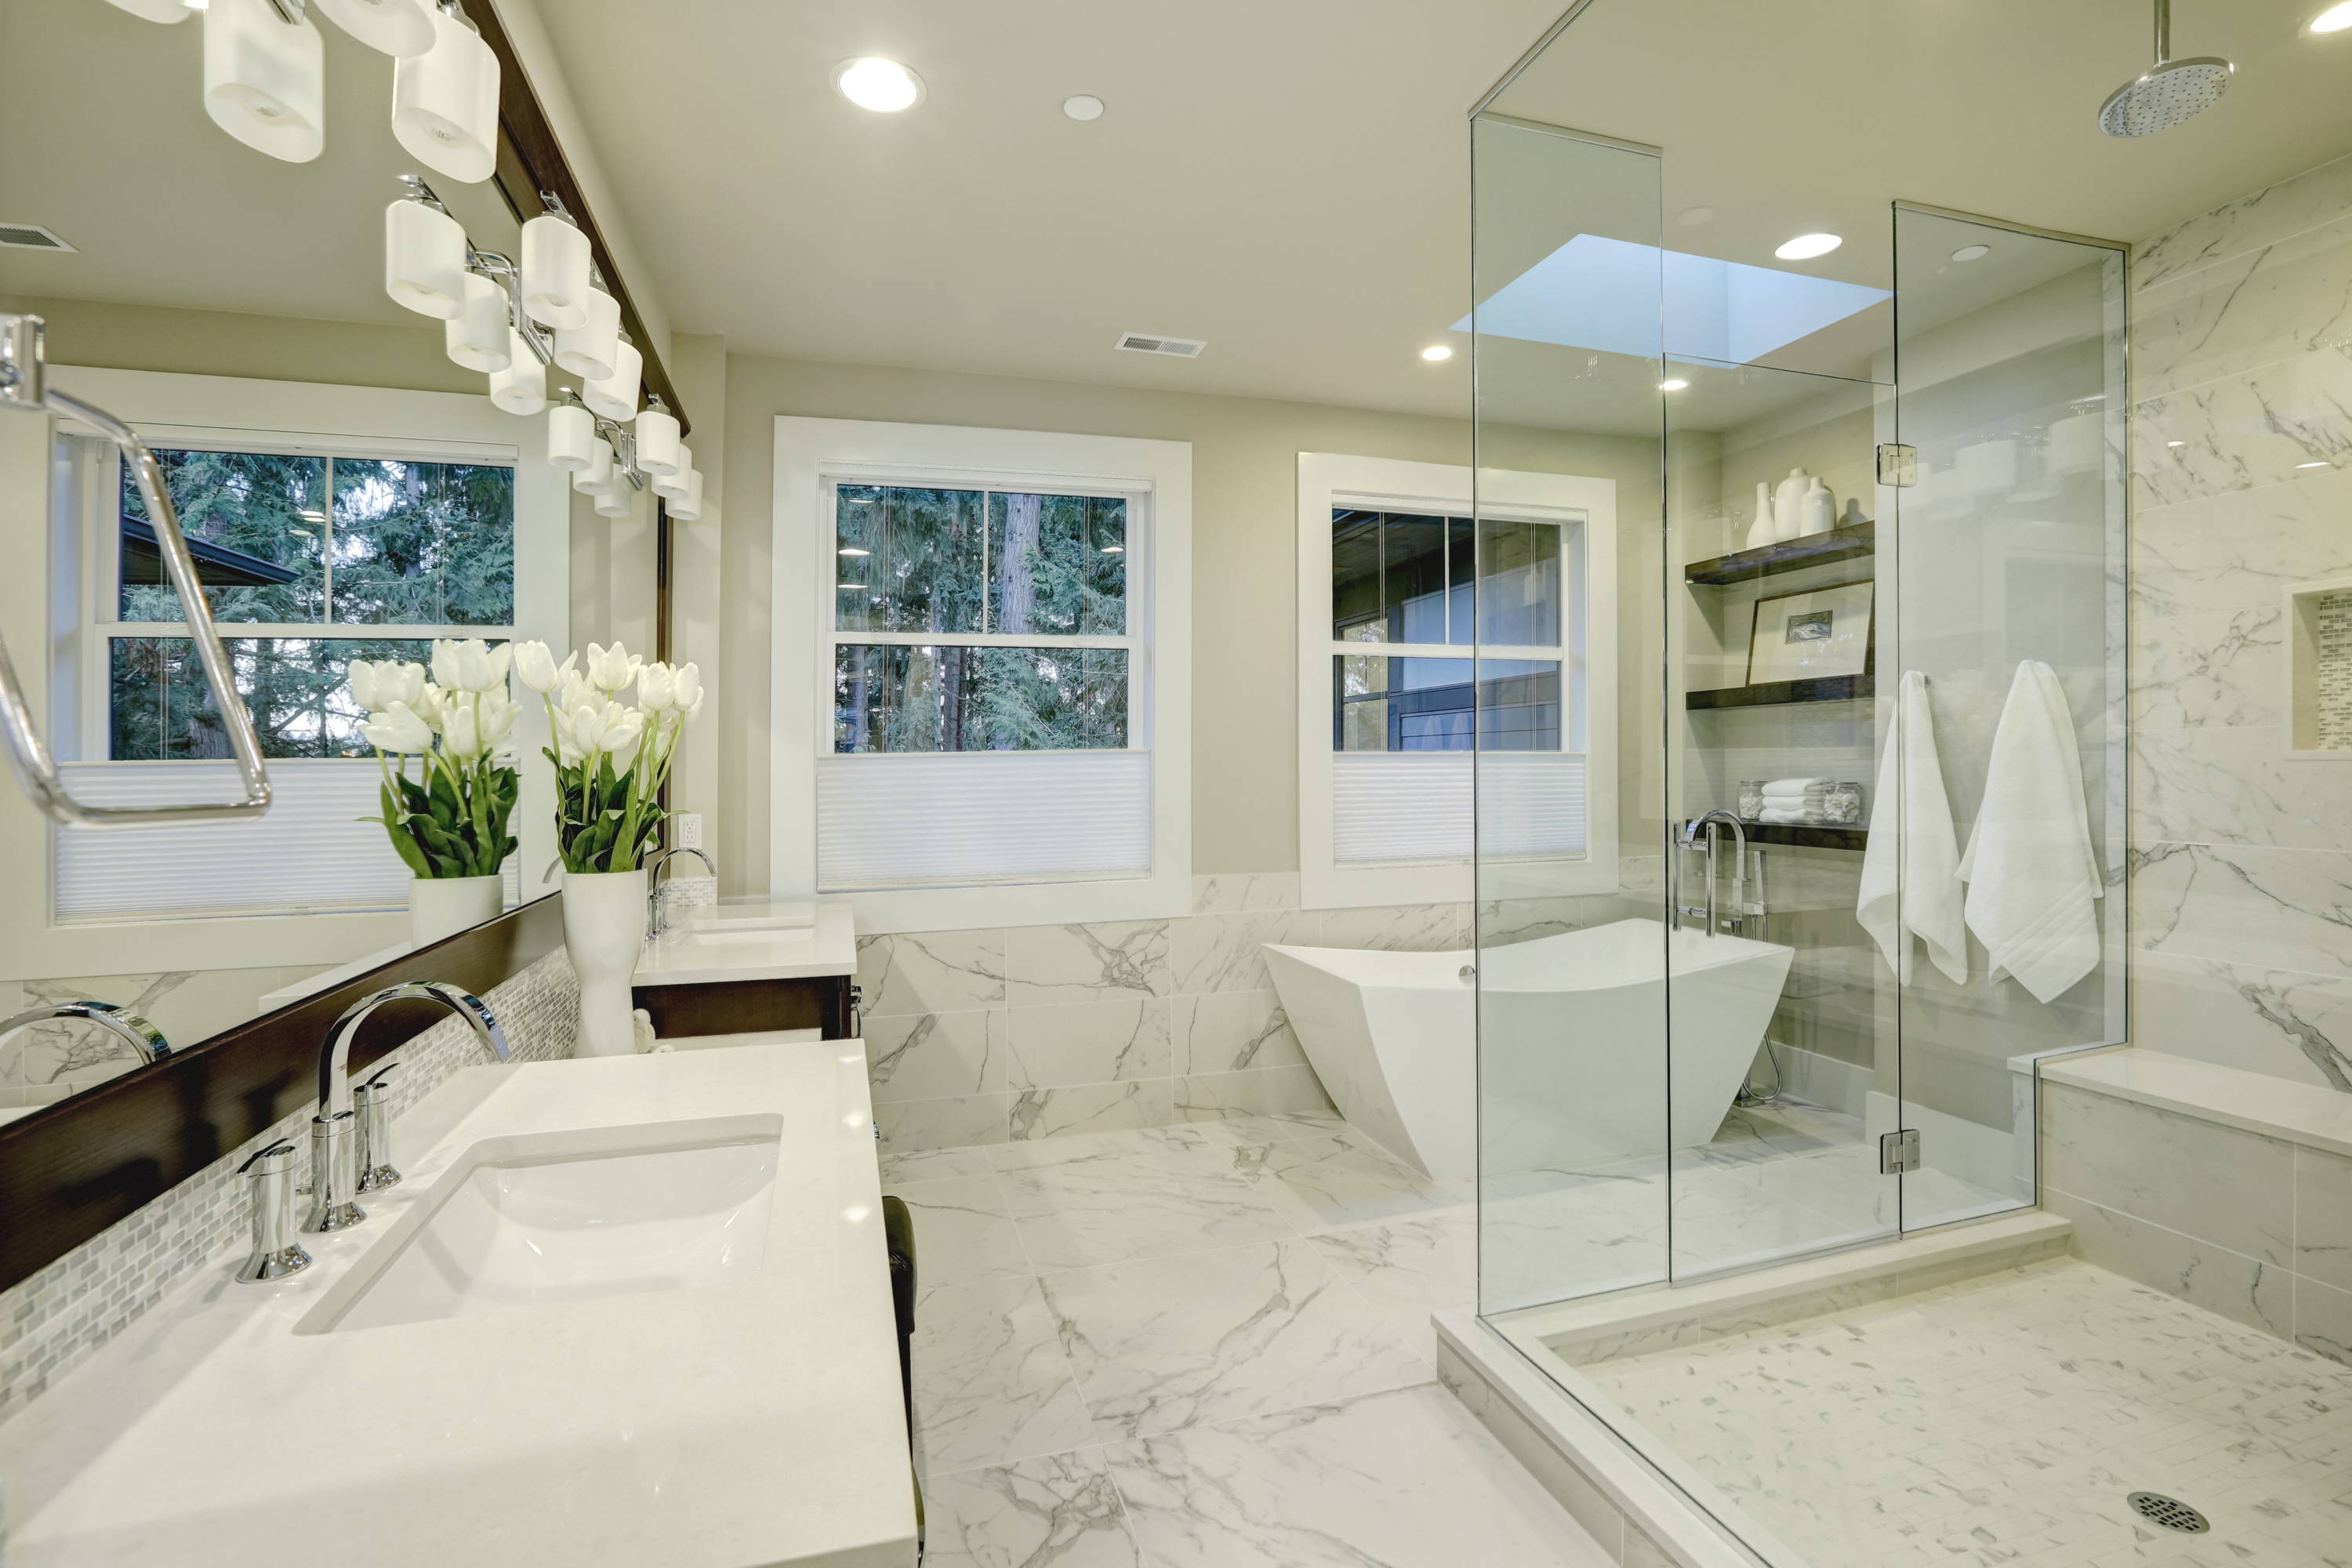 Frameless glass shower doors and vanity mirror